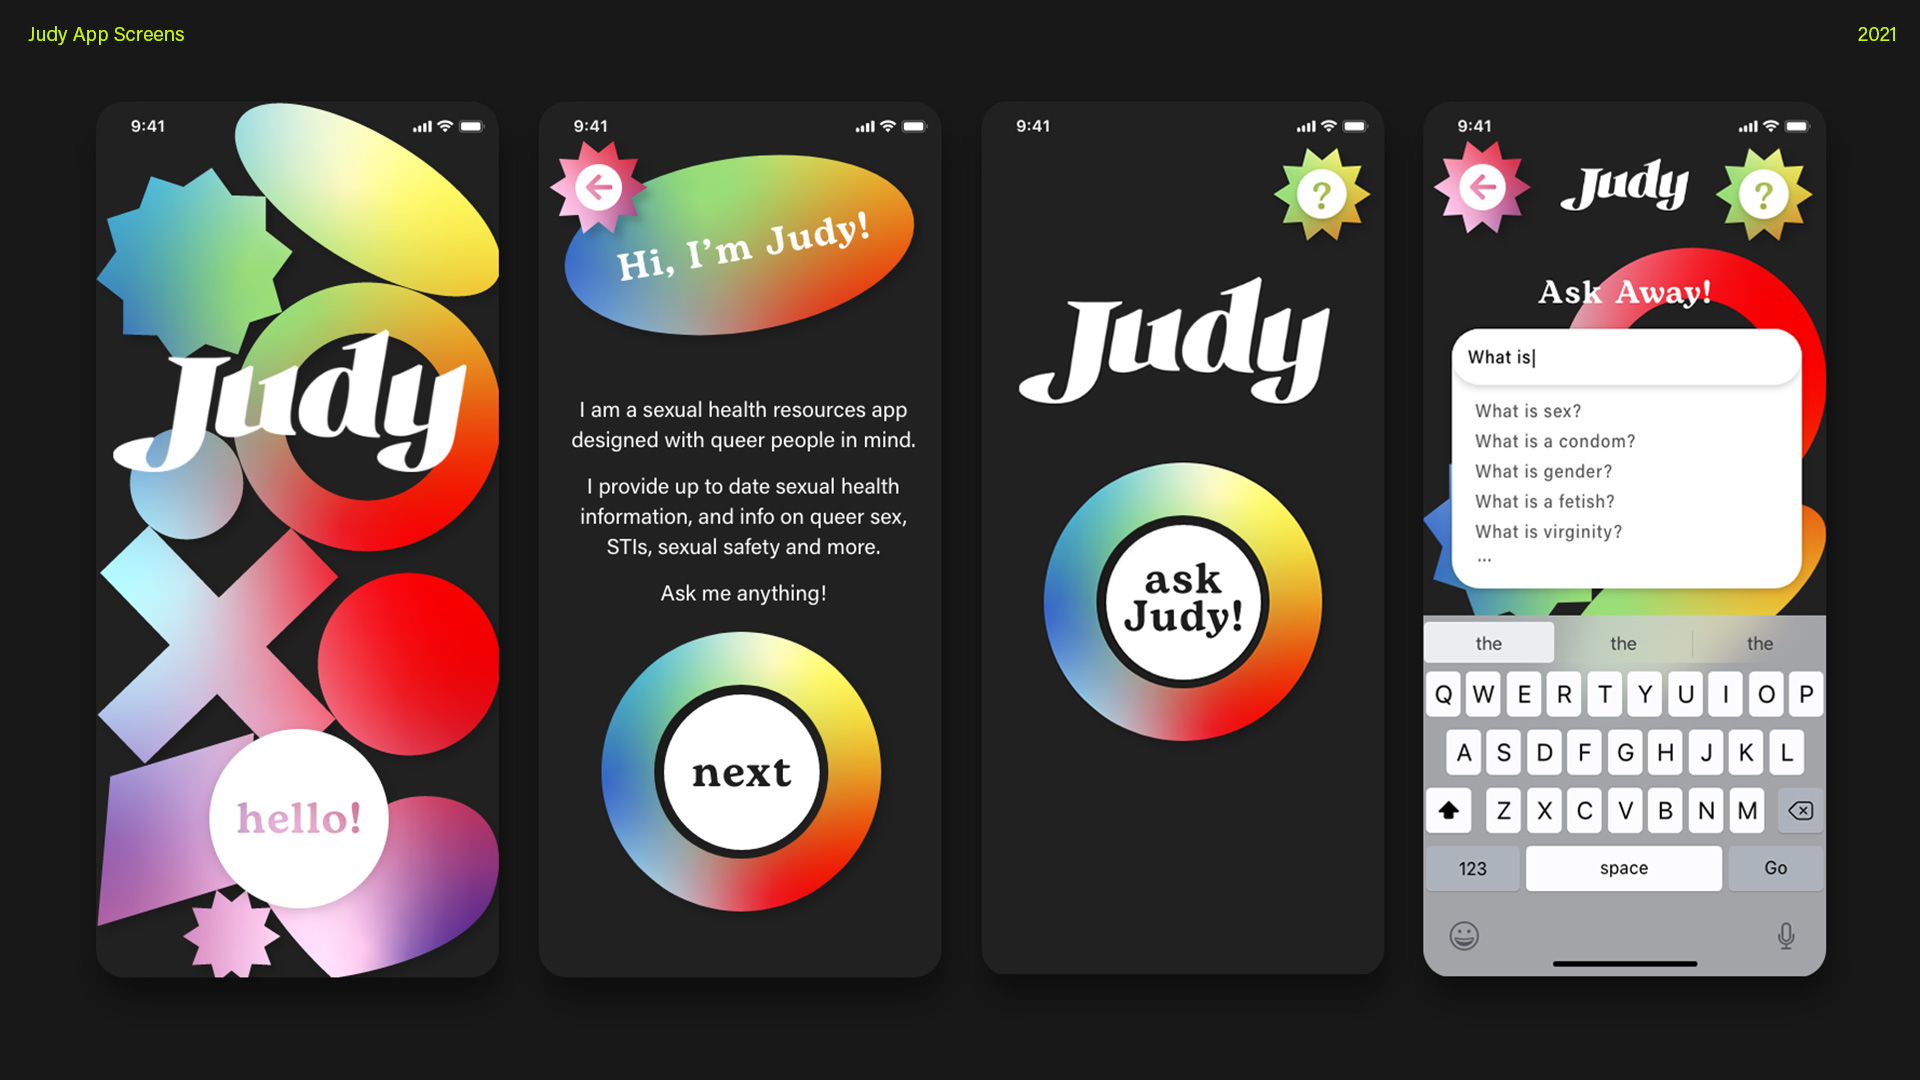 Screen captures of the app Judy